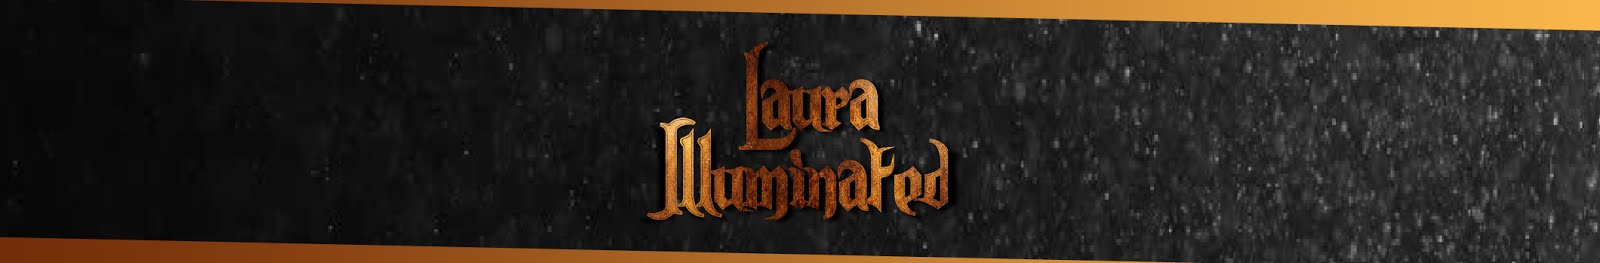 Laura Illuminated